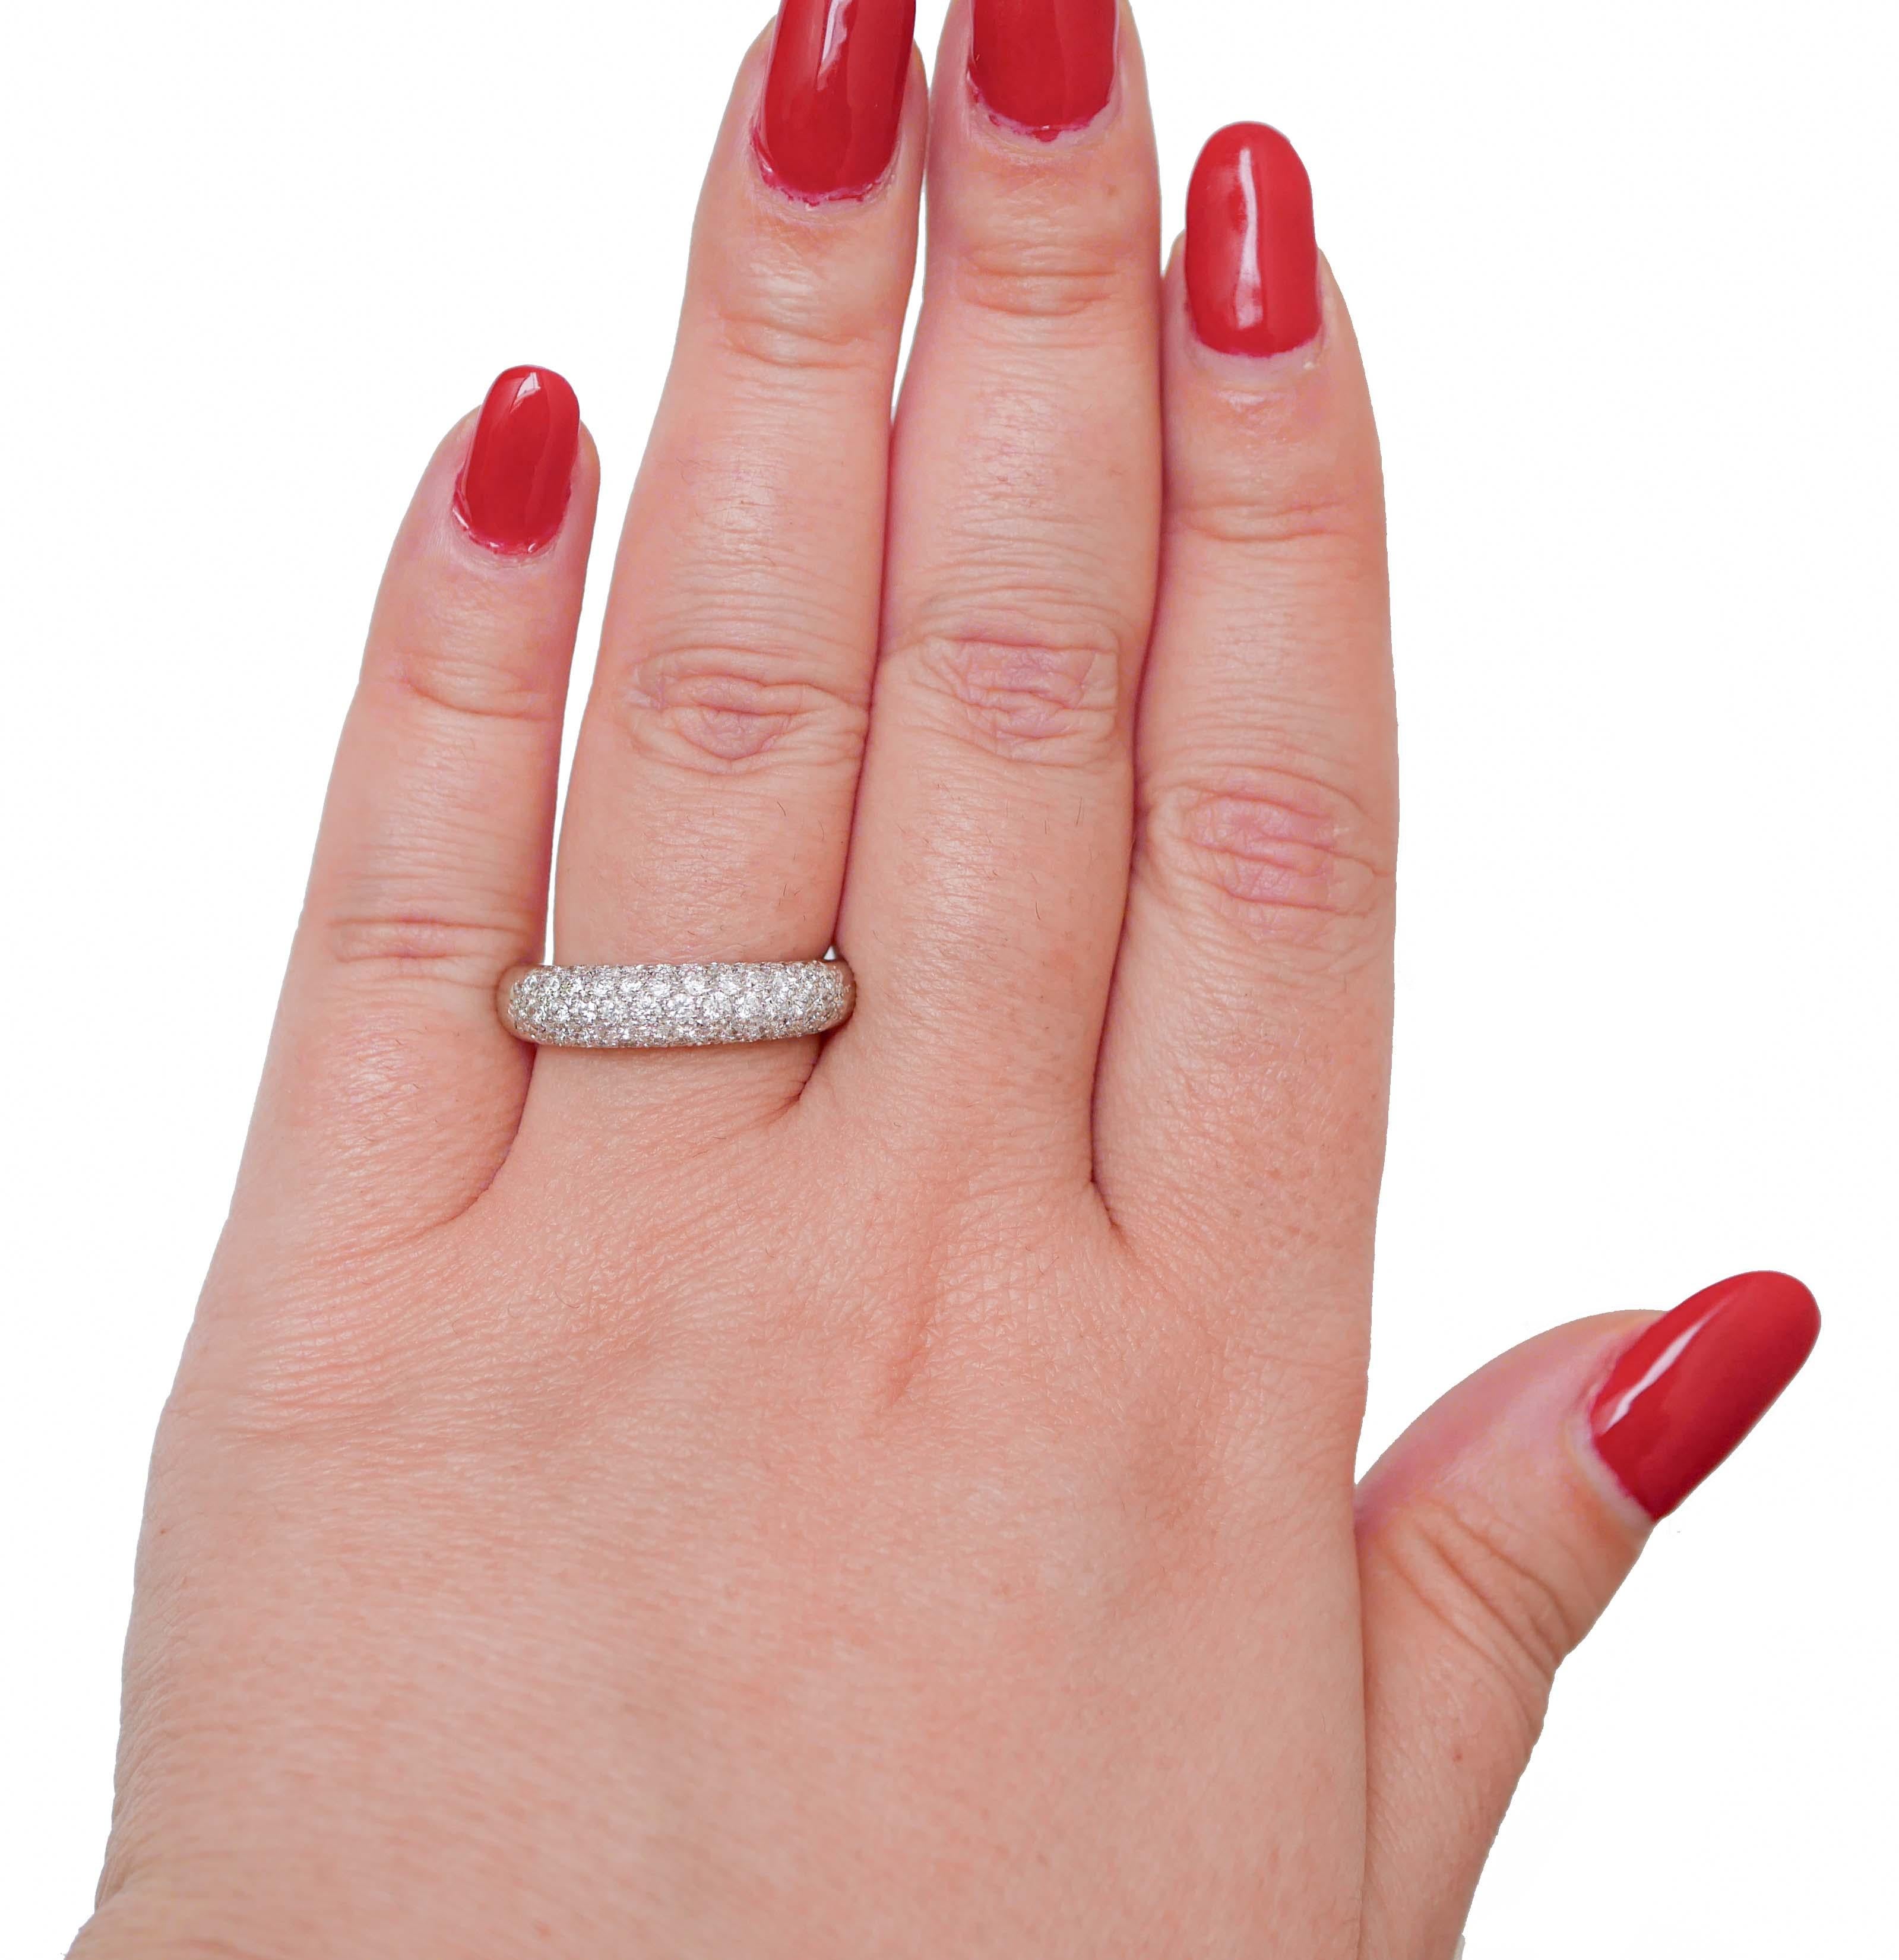 Brilliant Cut Diamonds, 18 Karat White Gold Ring. For Sale